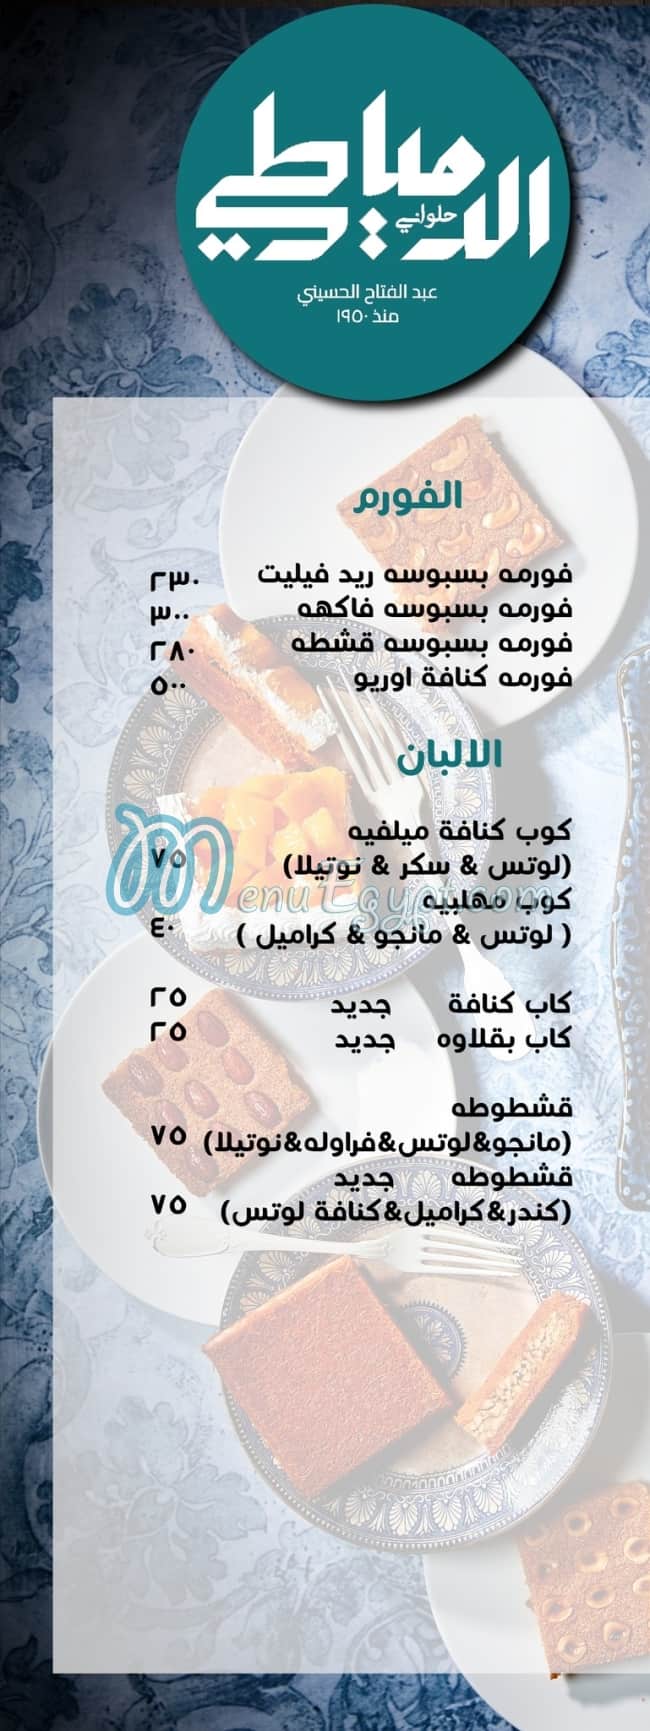 ElDomiaty Patisserie menu Egypt 2